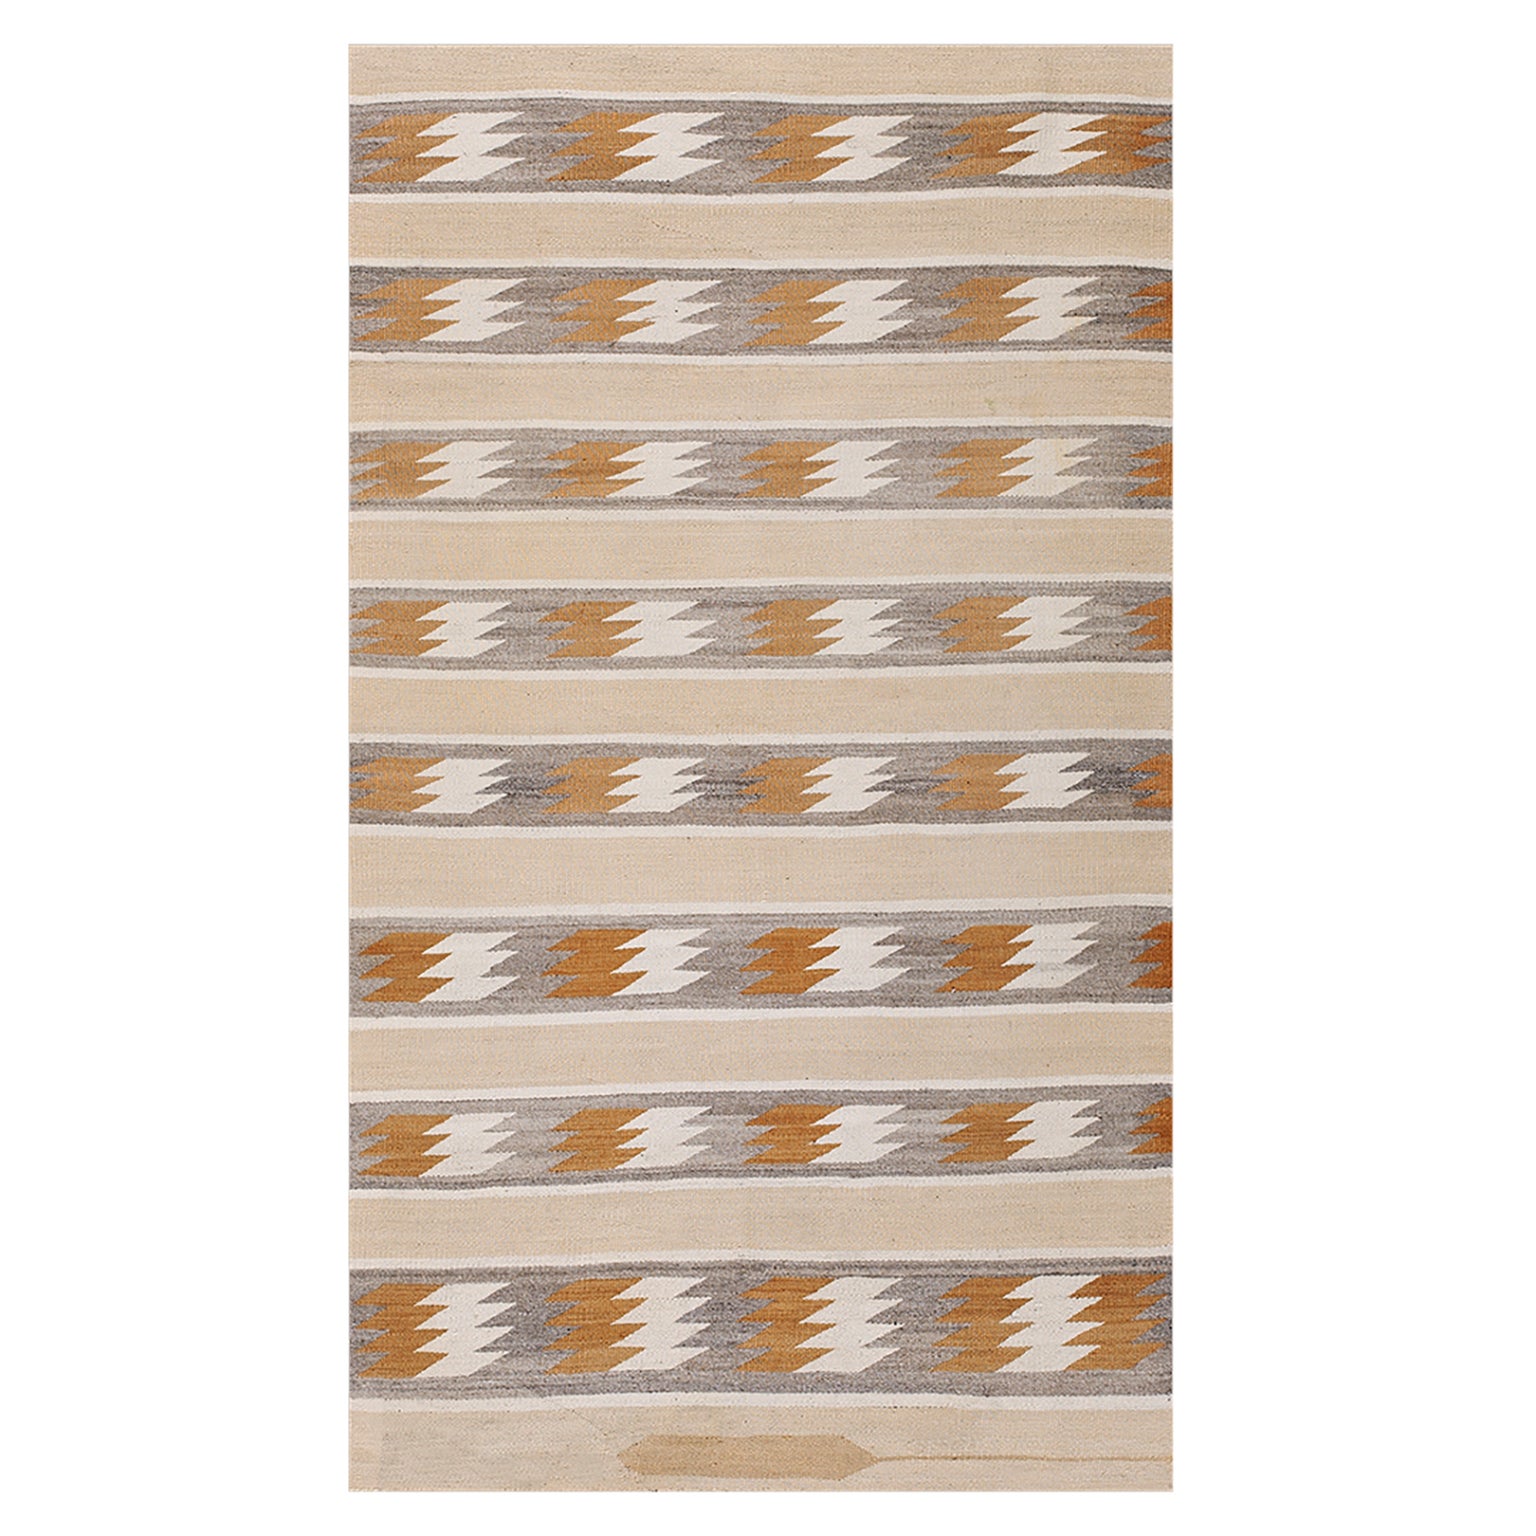 1930s American Navajo Rug ( 3'3"x 5'6" - 99 x 167 ) 